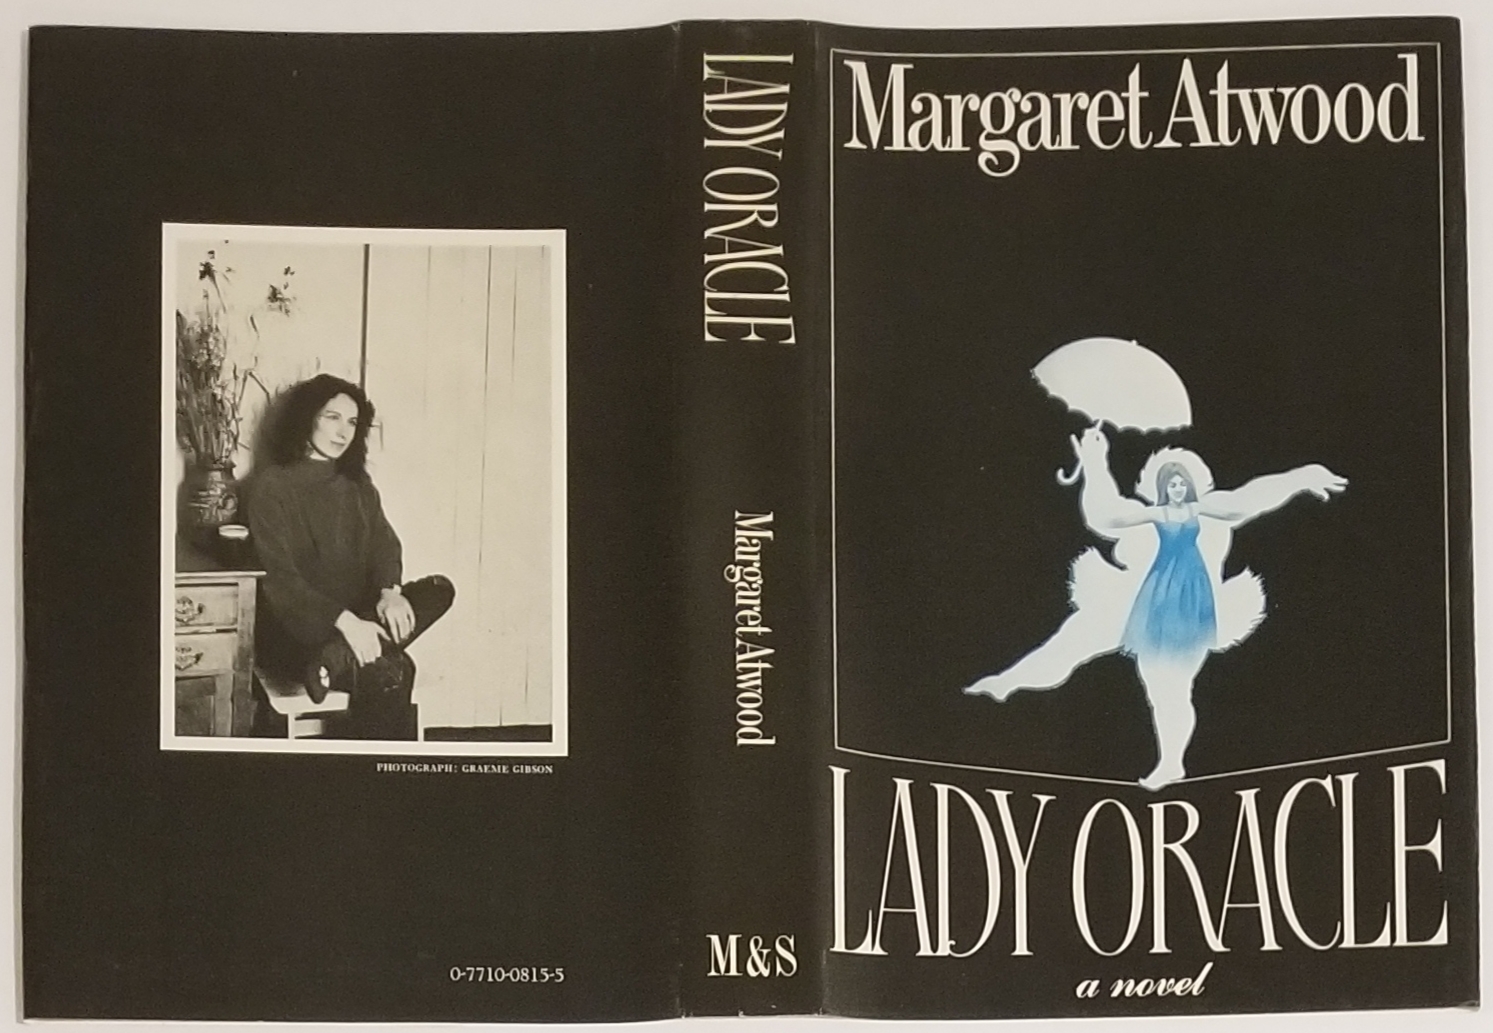 Lady Oracle Margaret Atwood